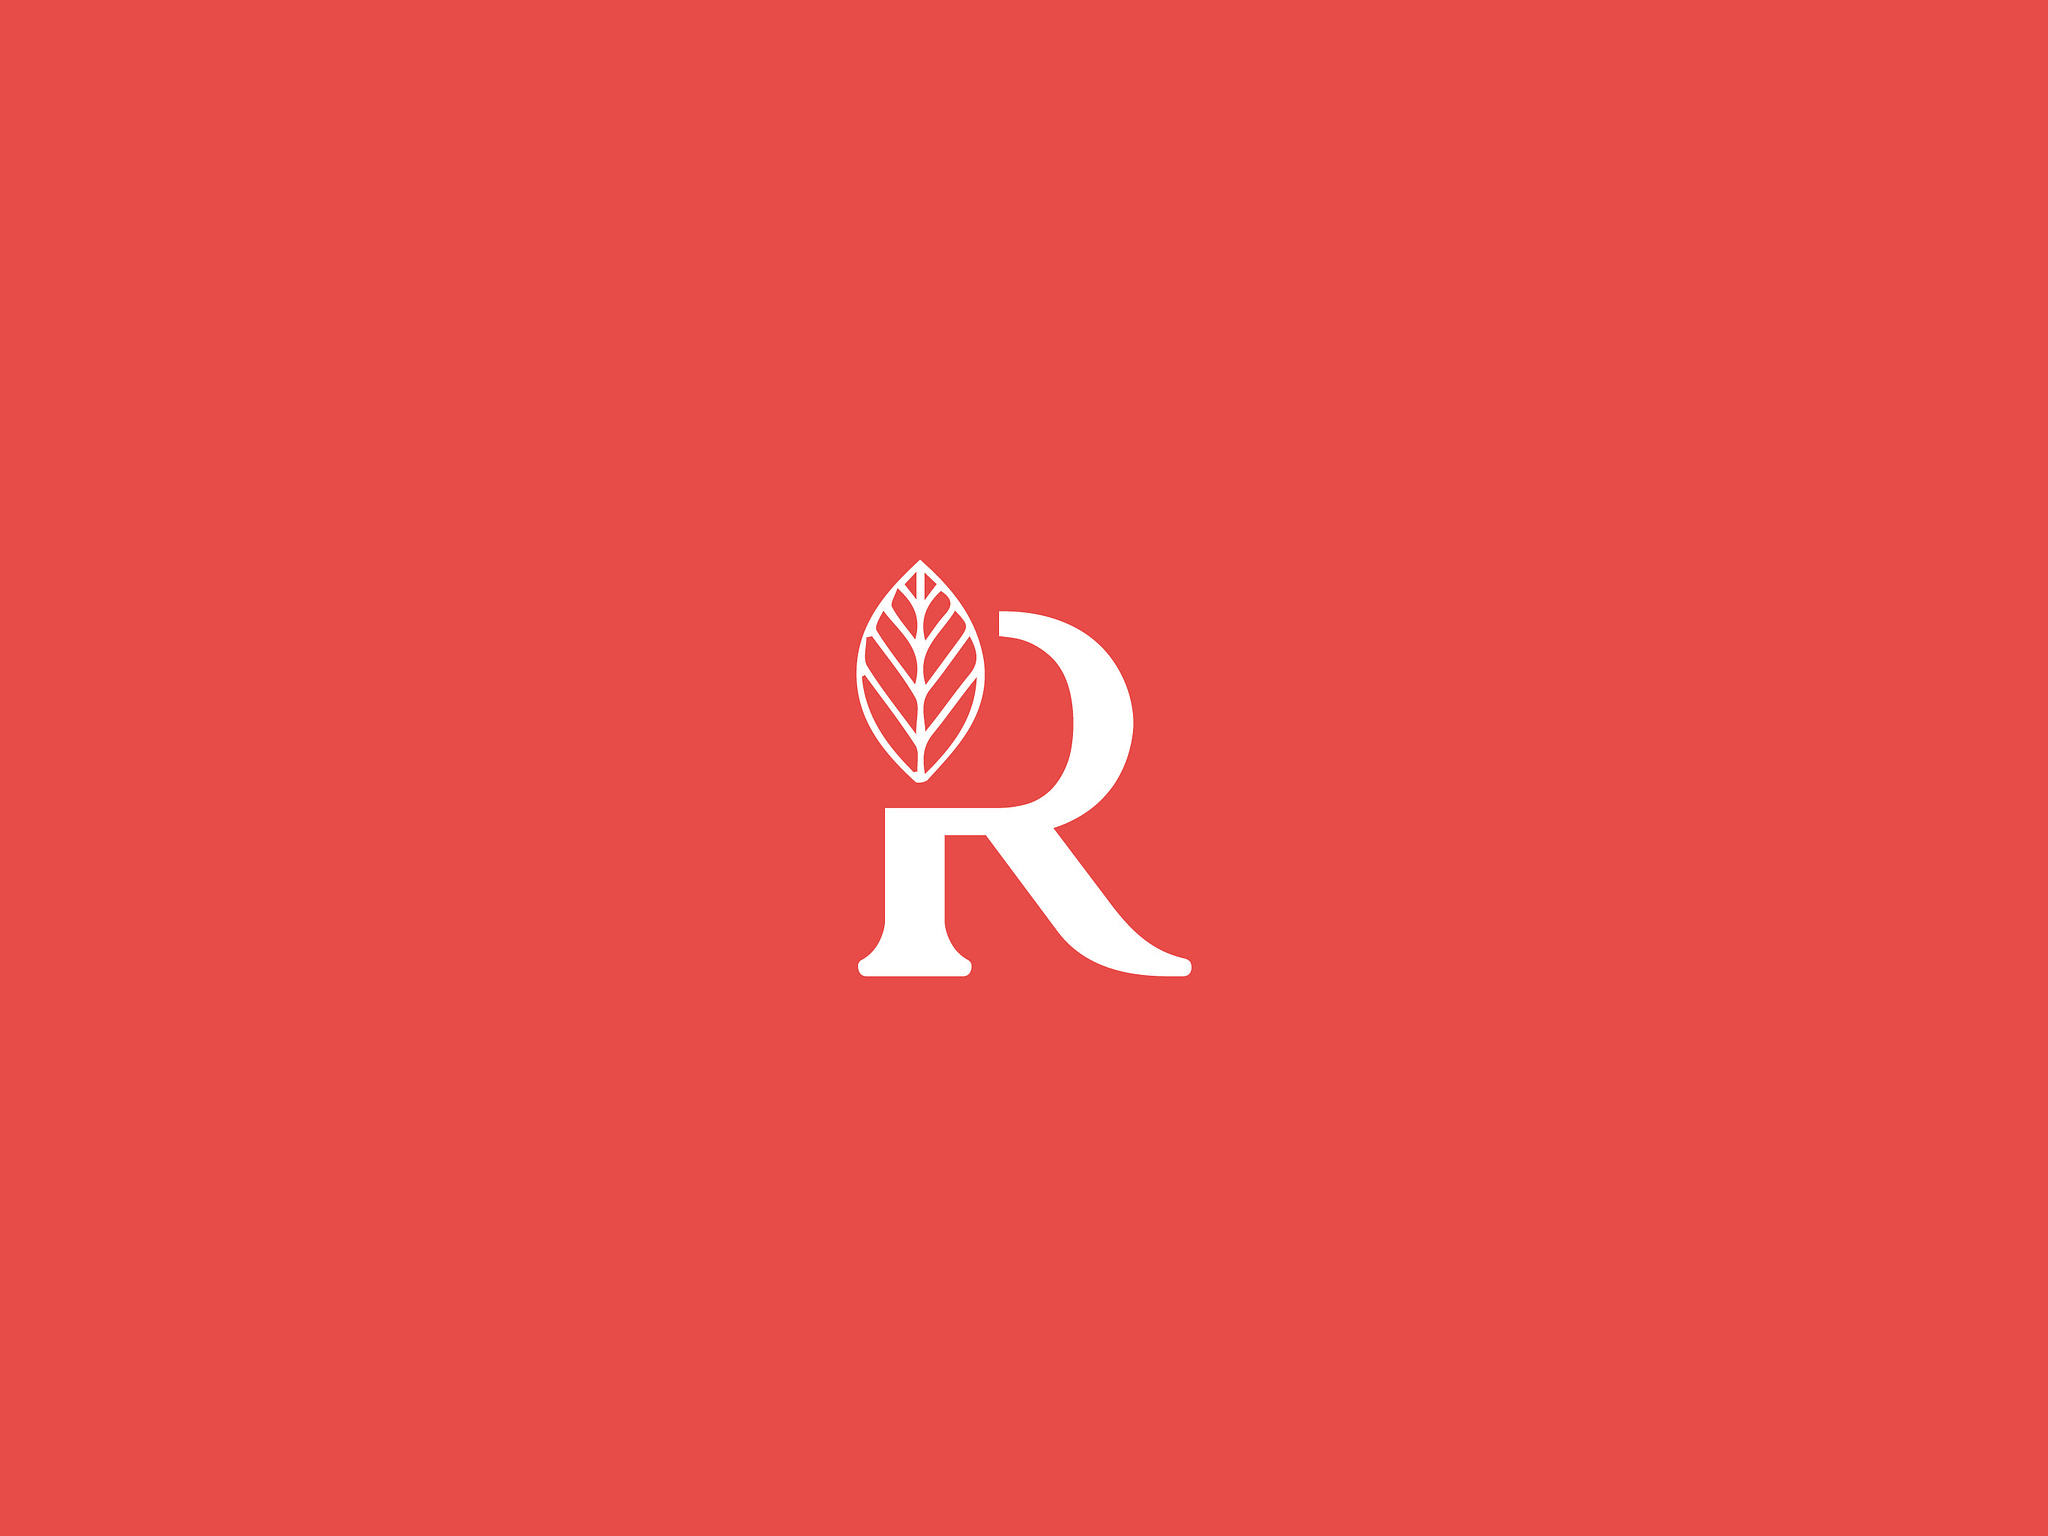 R logo design concept by Tajulislam12 on Dribbble